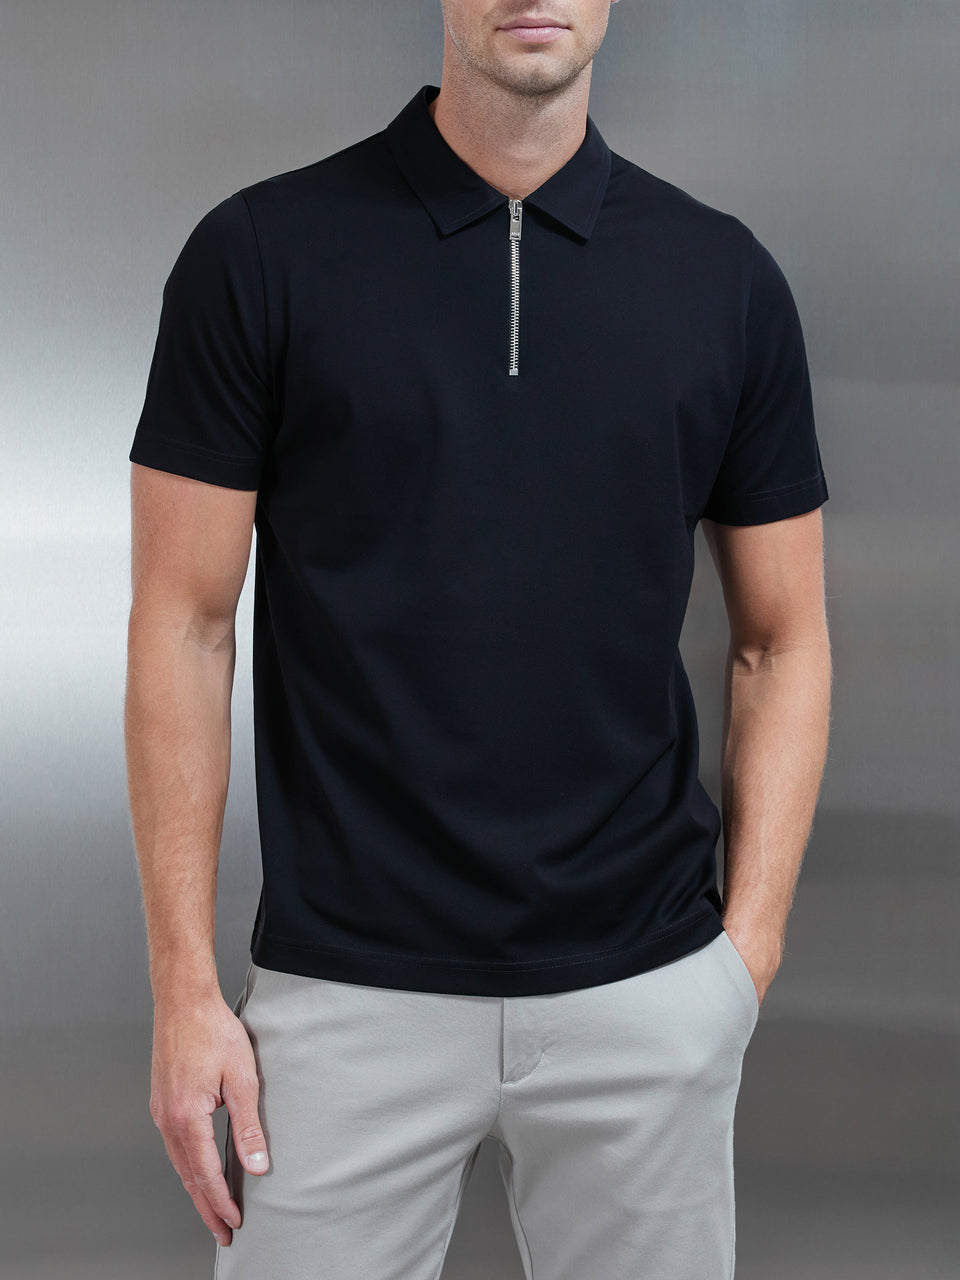 Mercerised Pique Zip Polo Shirt in Black